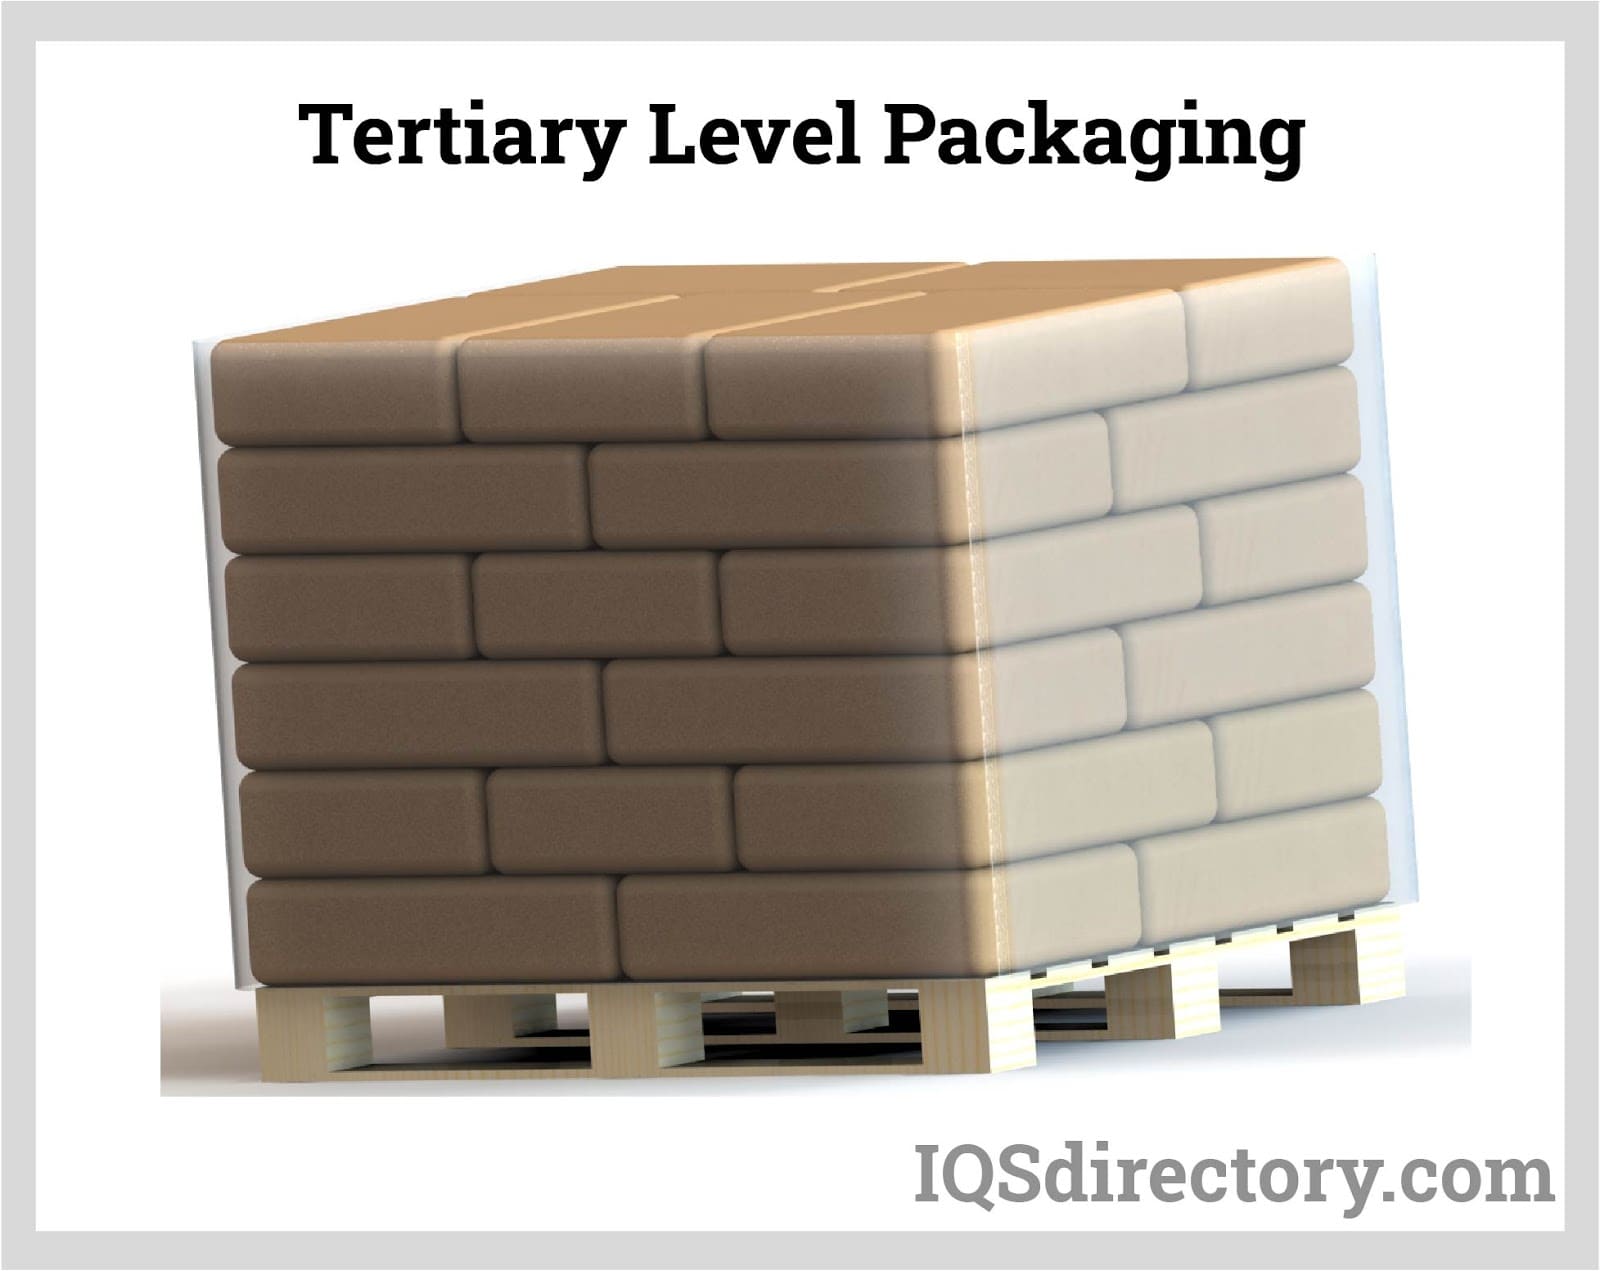 Tertiary Level Packaging